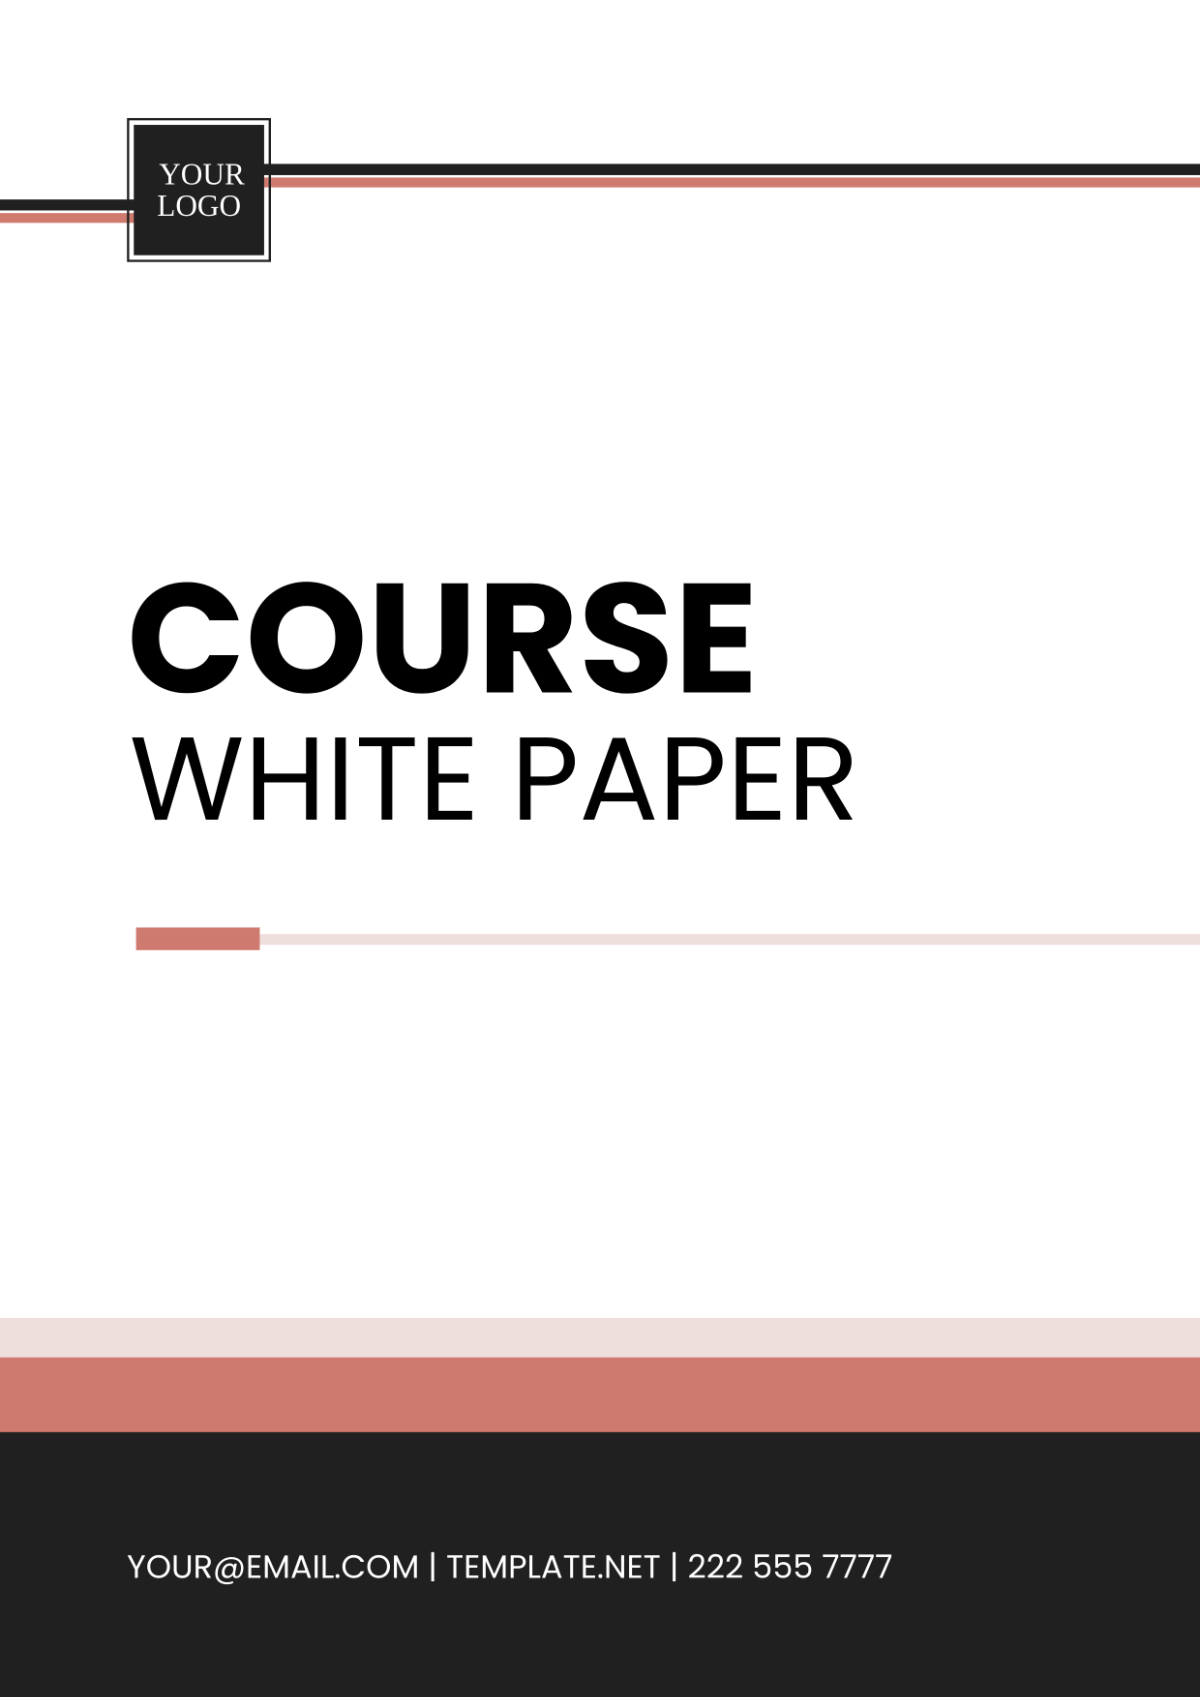 Course White Paper Template